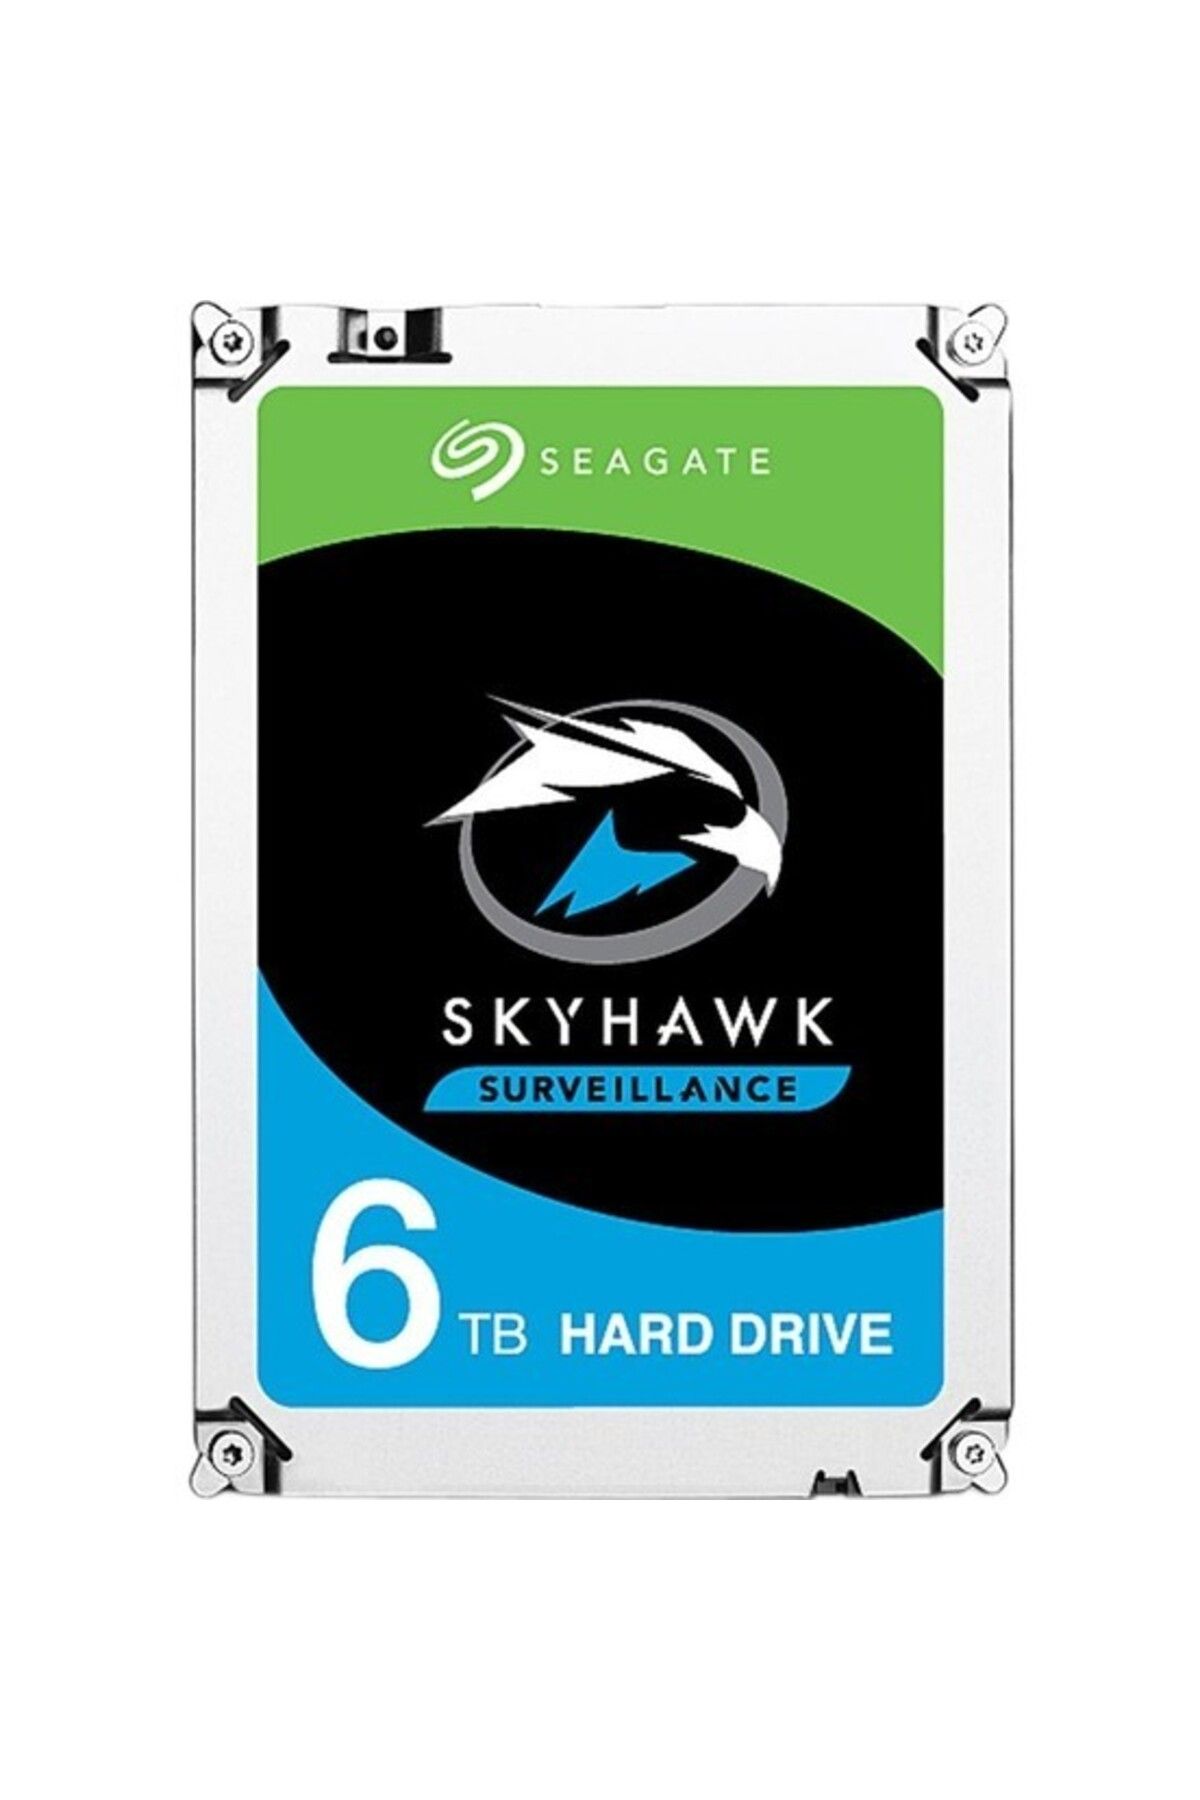 Seagate Skyhawk St6000vx001 6tb 3.5" 256mb 7/24 Güvenlik Disk